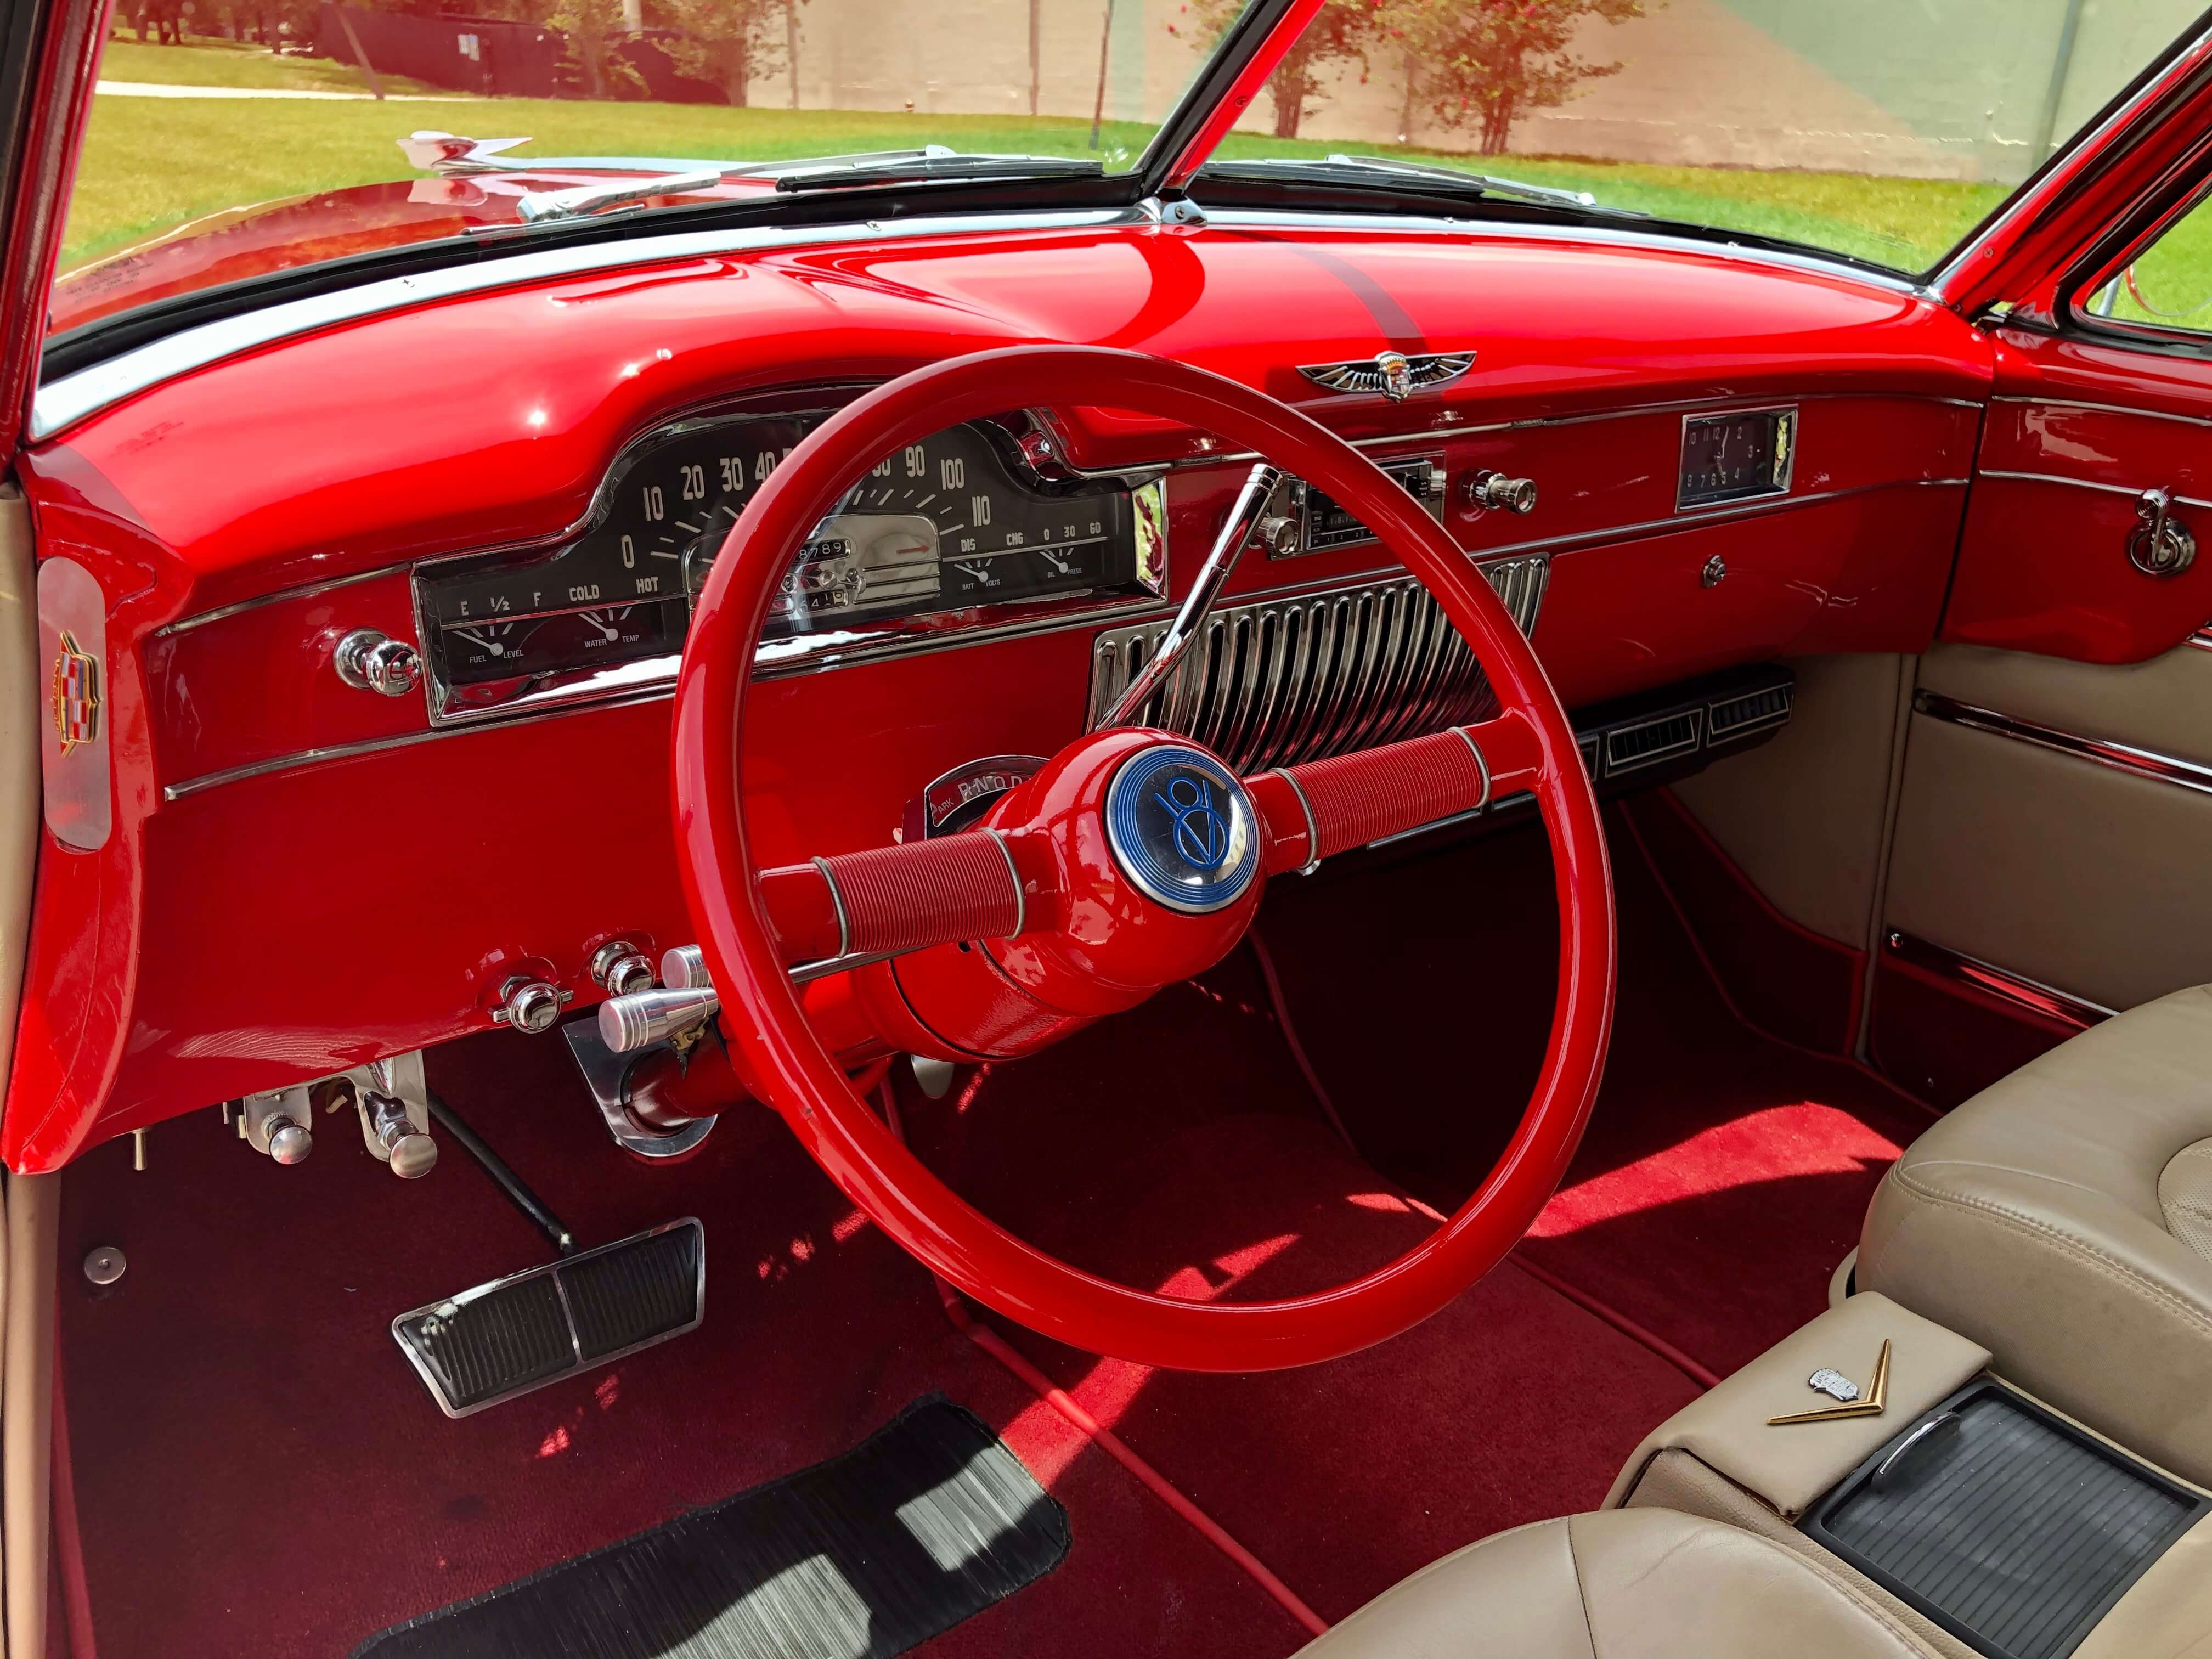 1949 Cadillac Convertible interior